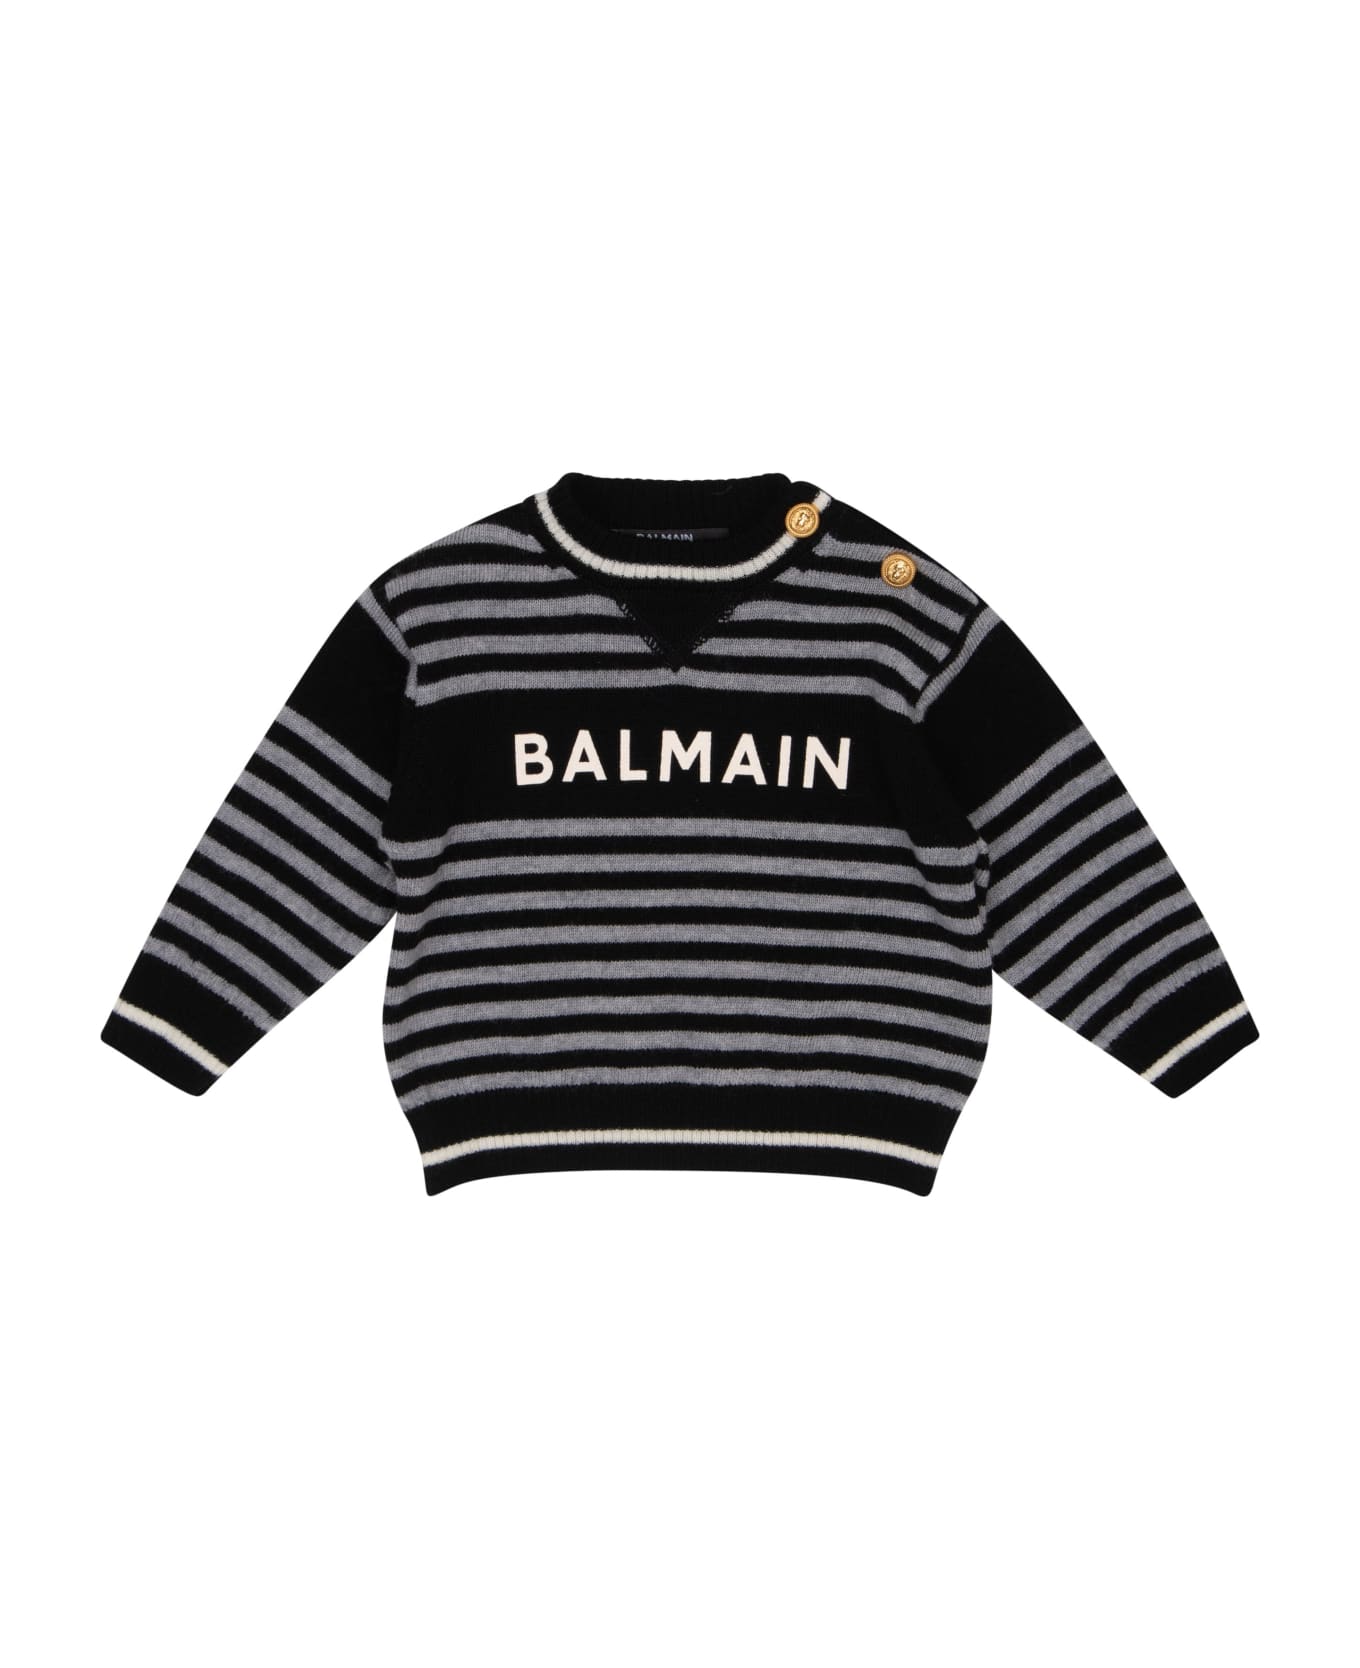 Balmain Printed Sweater - Black/grey